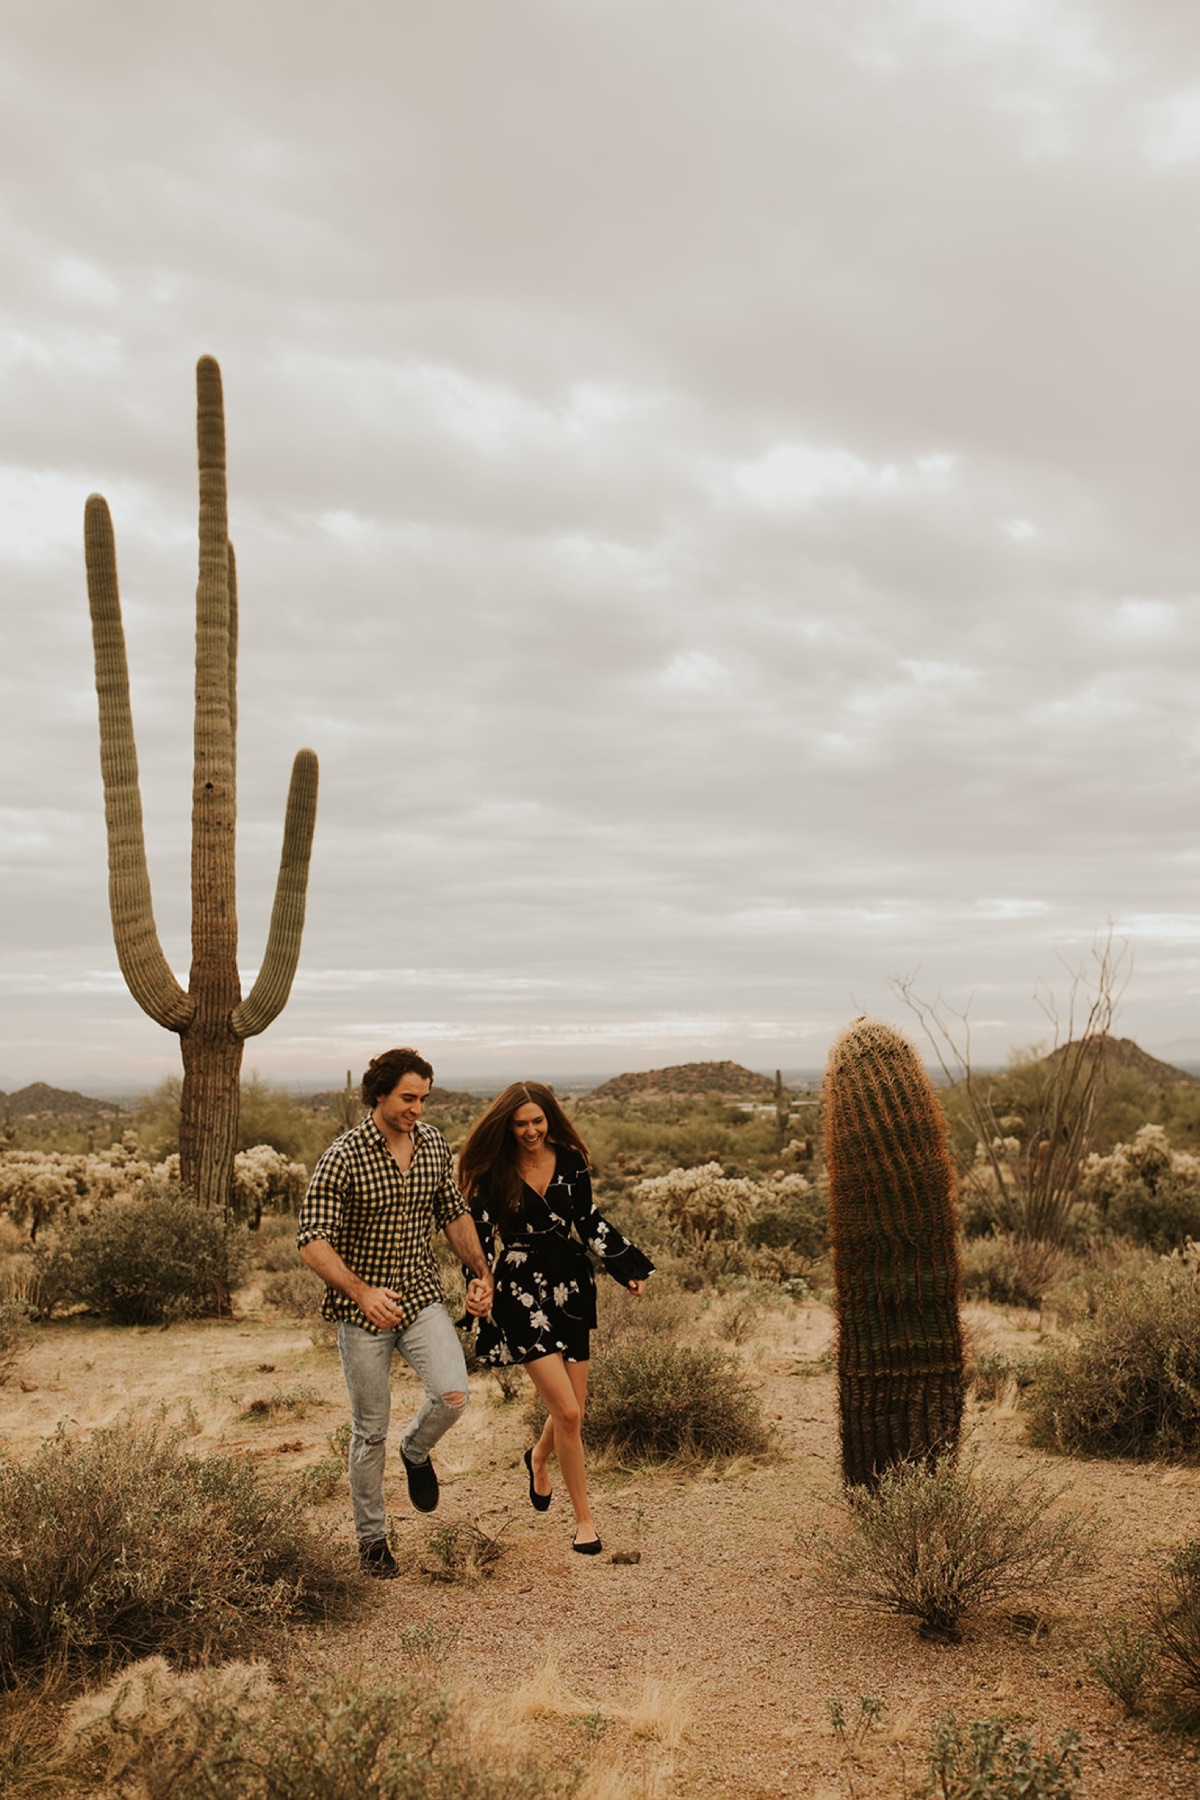 Exploring the Arizona desert for an epic couples shoot